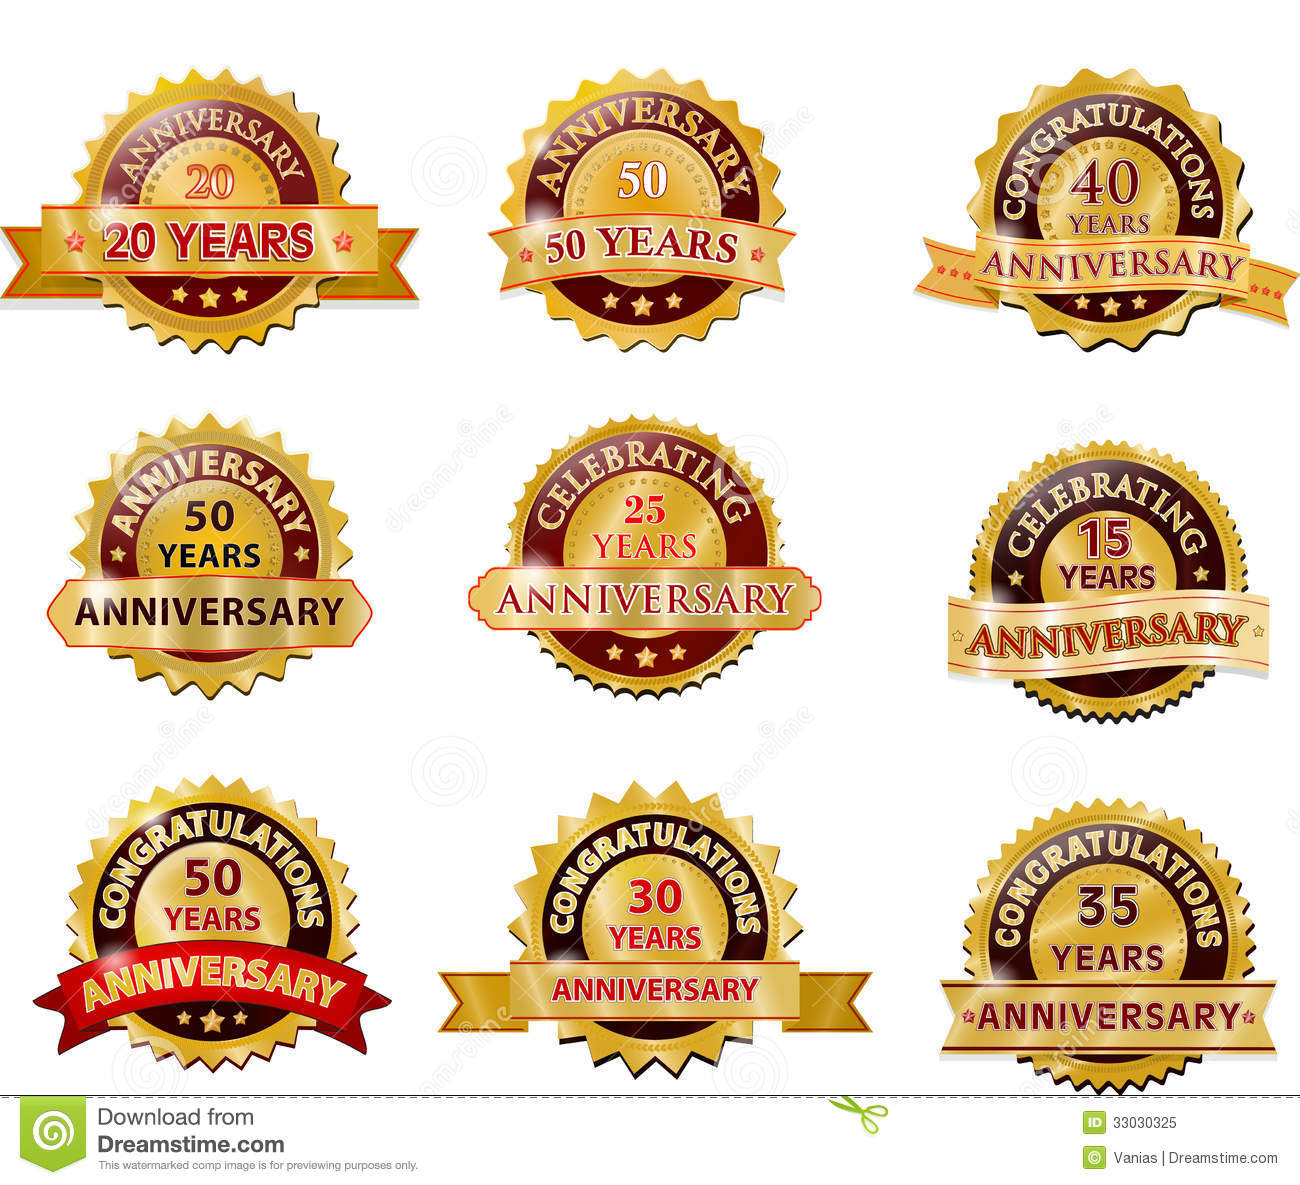 Anniversary Free Vector Badges